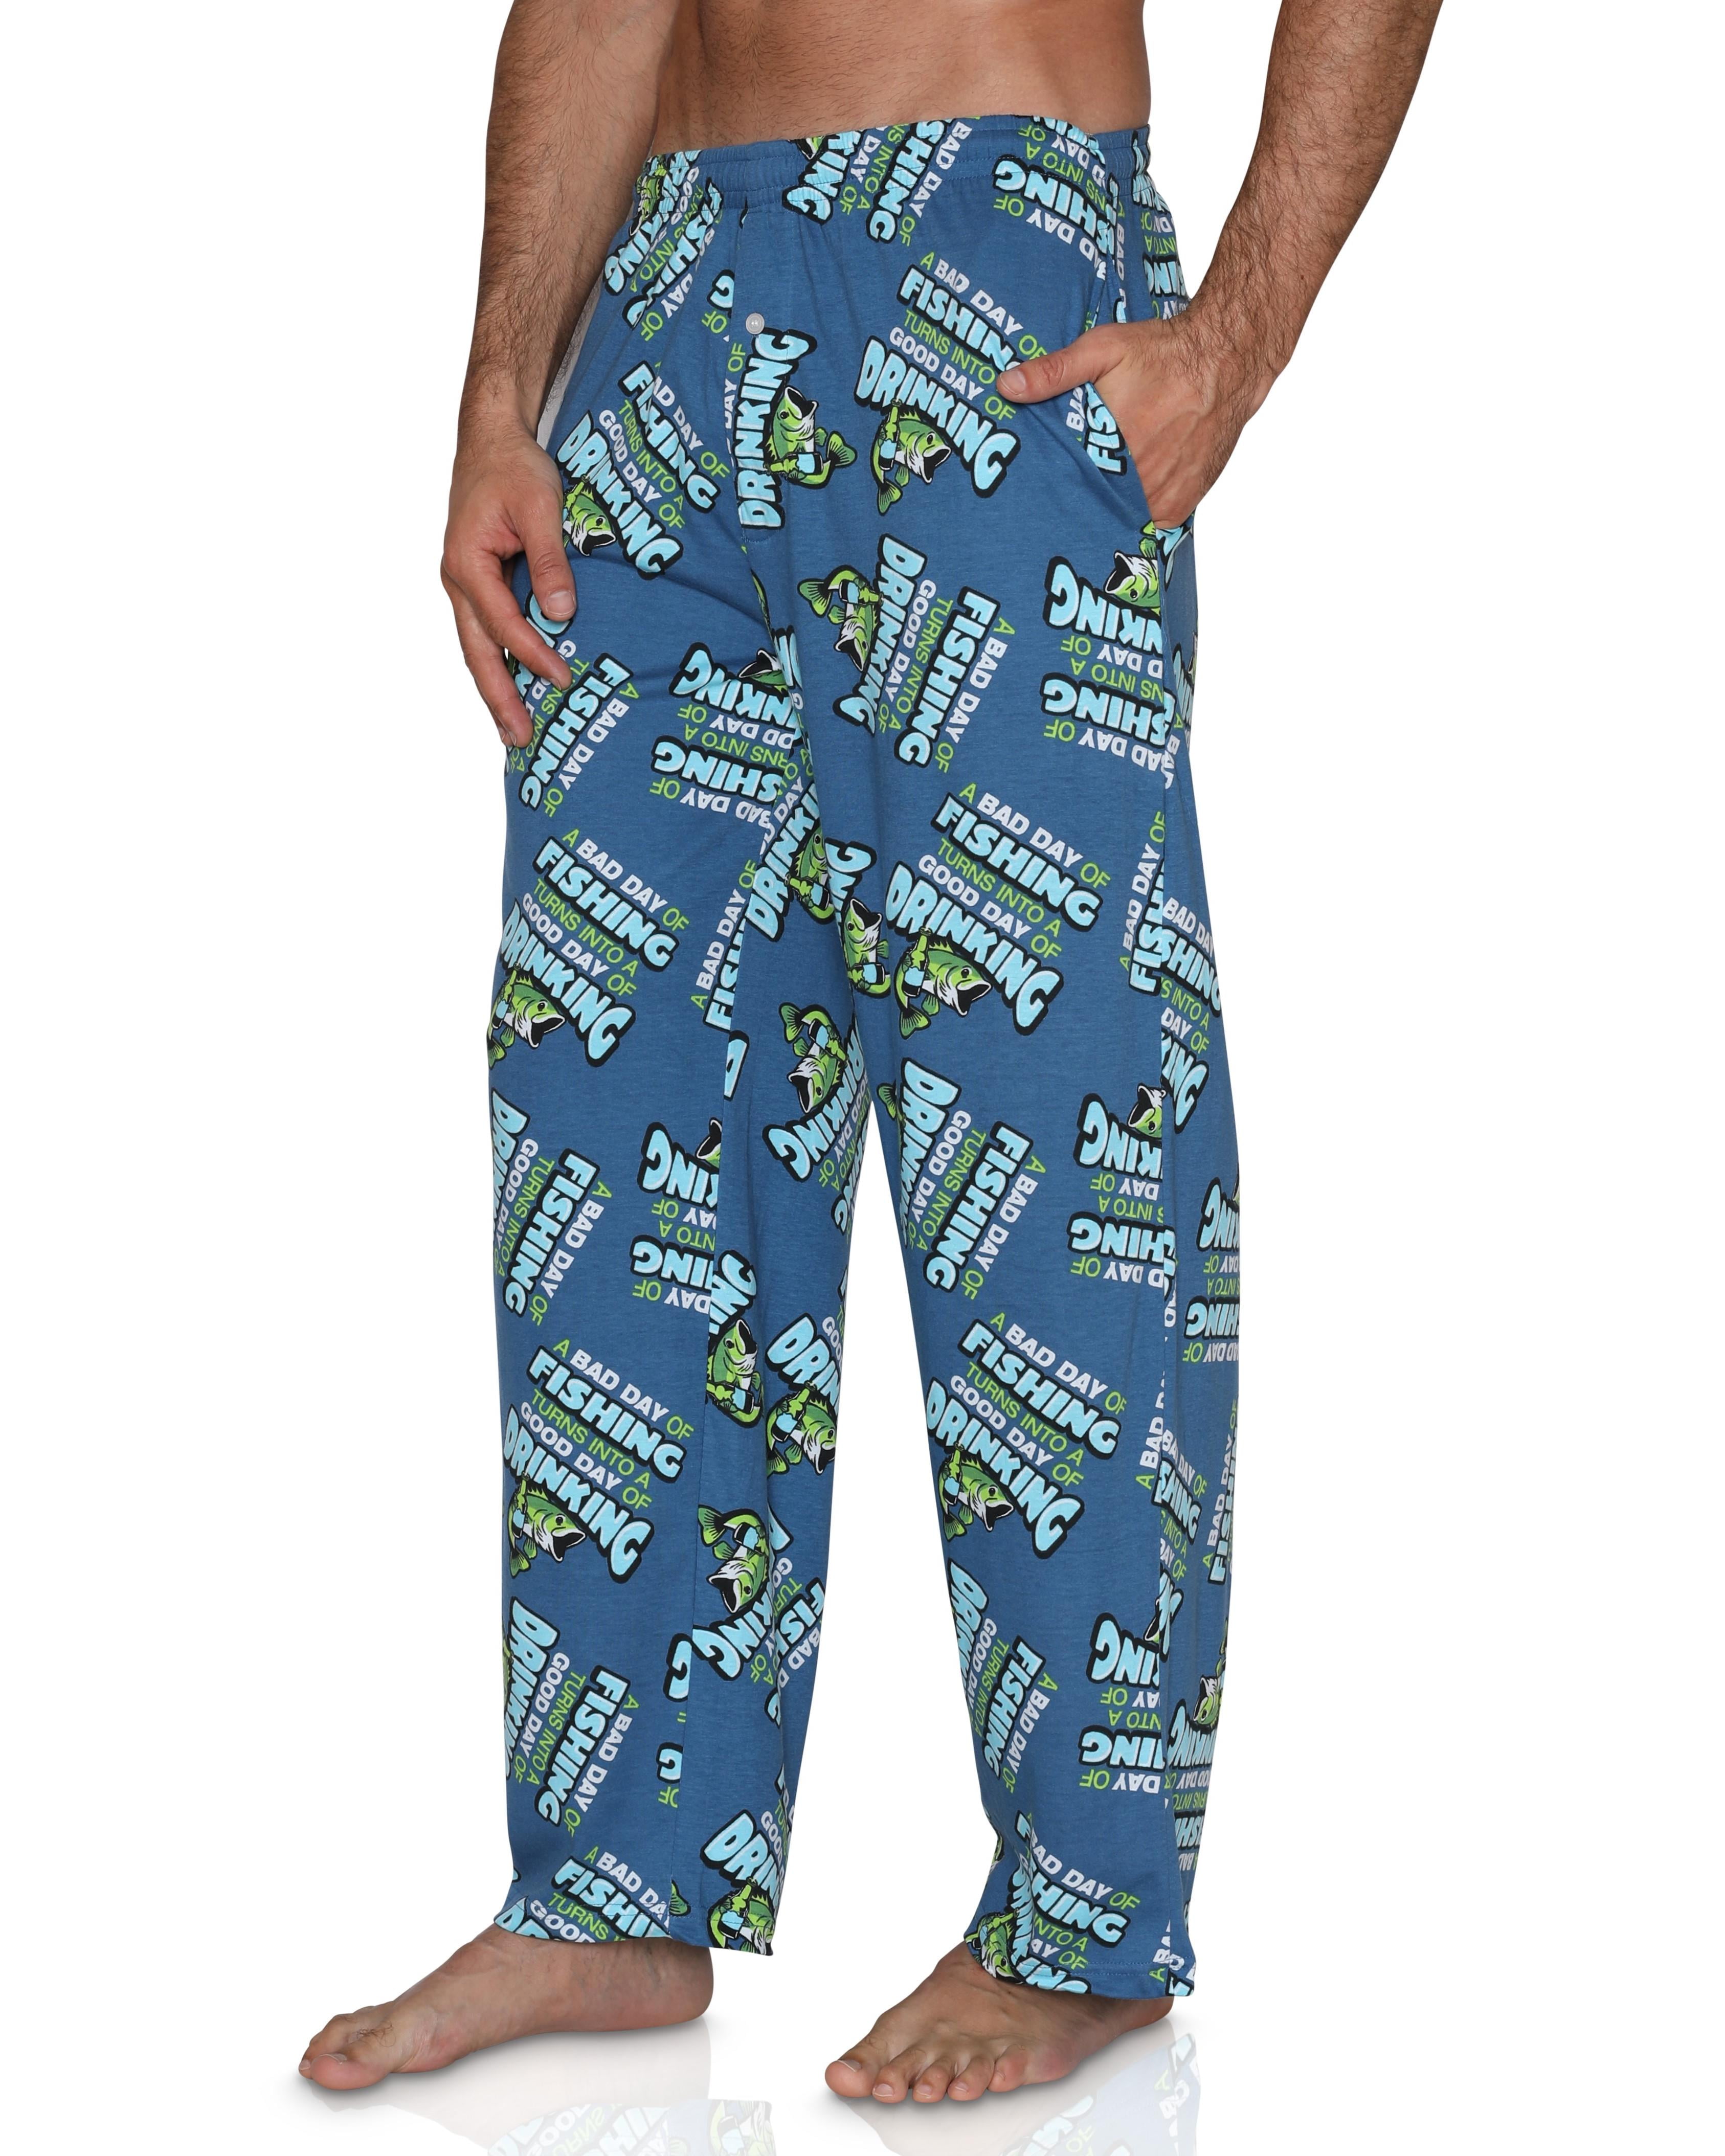 Mens Fun Pants Lounge Pajama Pants Boxers Adult Sleepwear Fishing  Drinking Size Small  Walmartcom